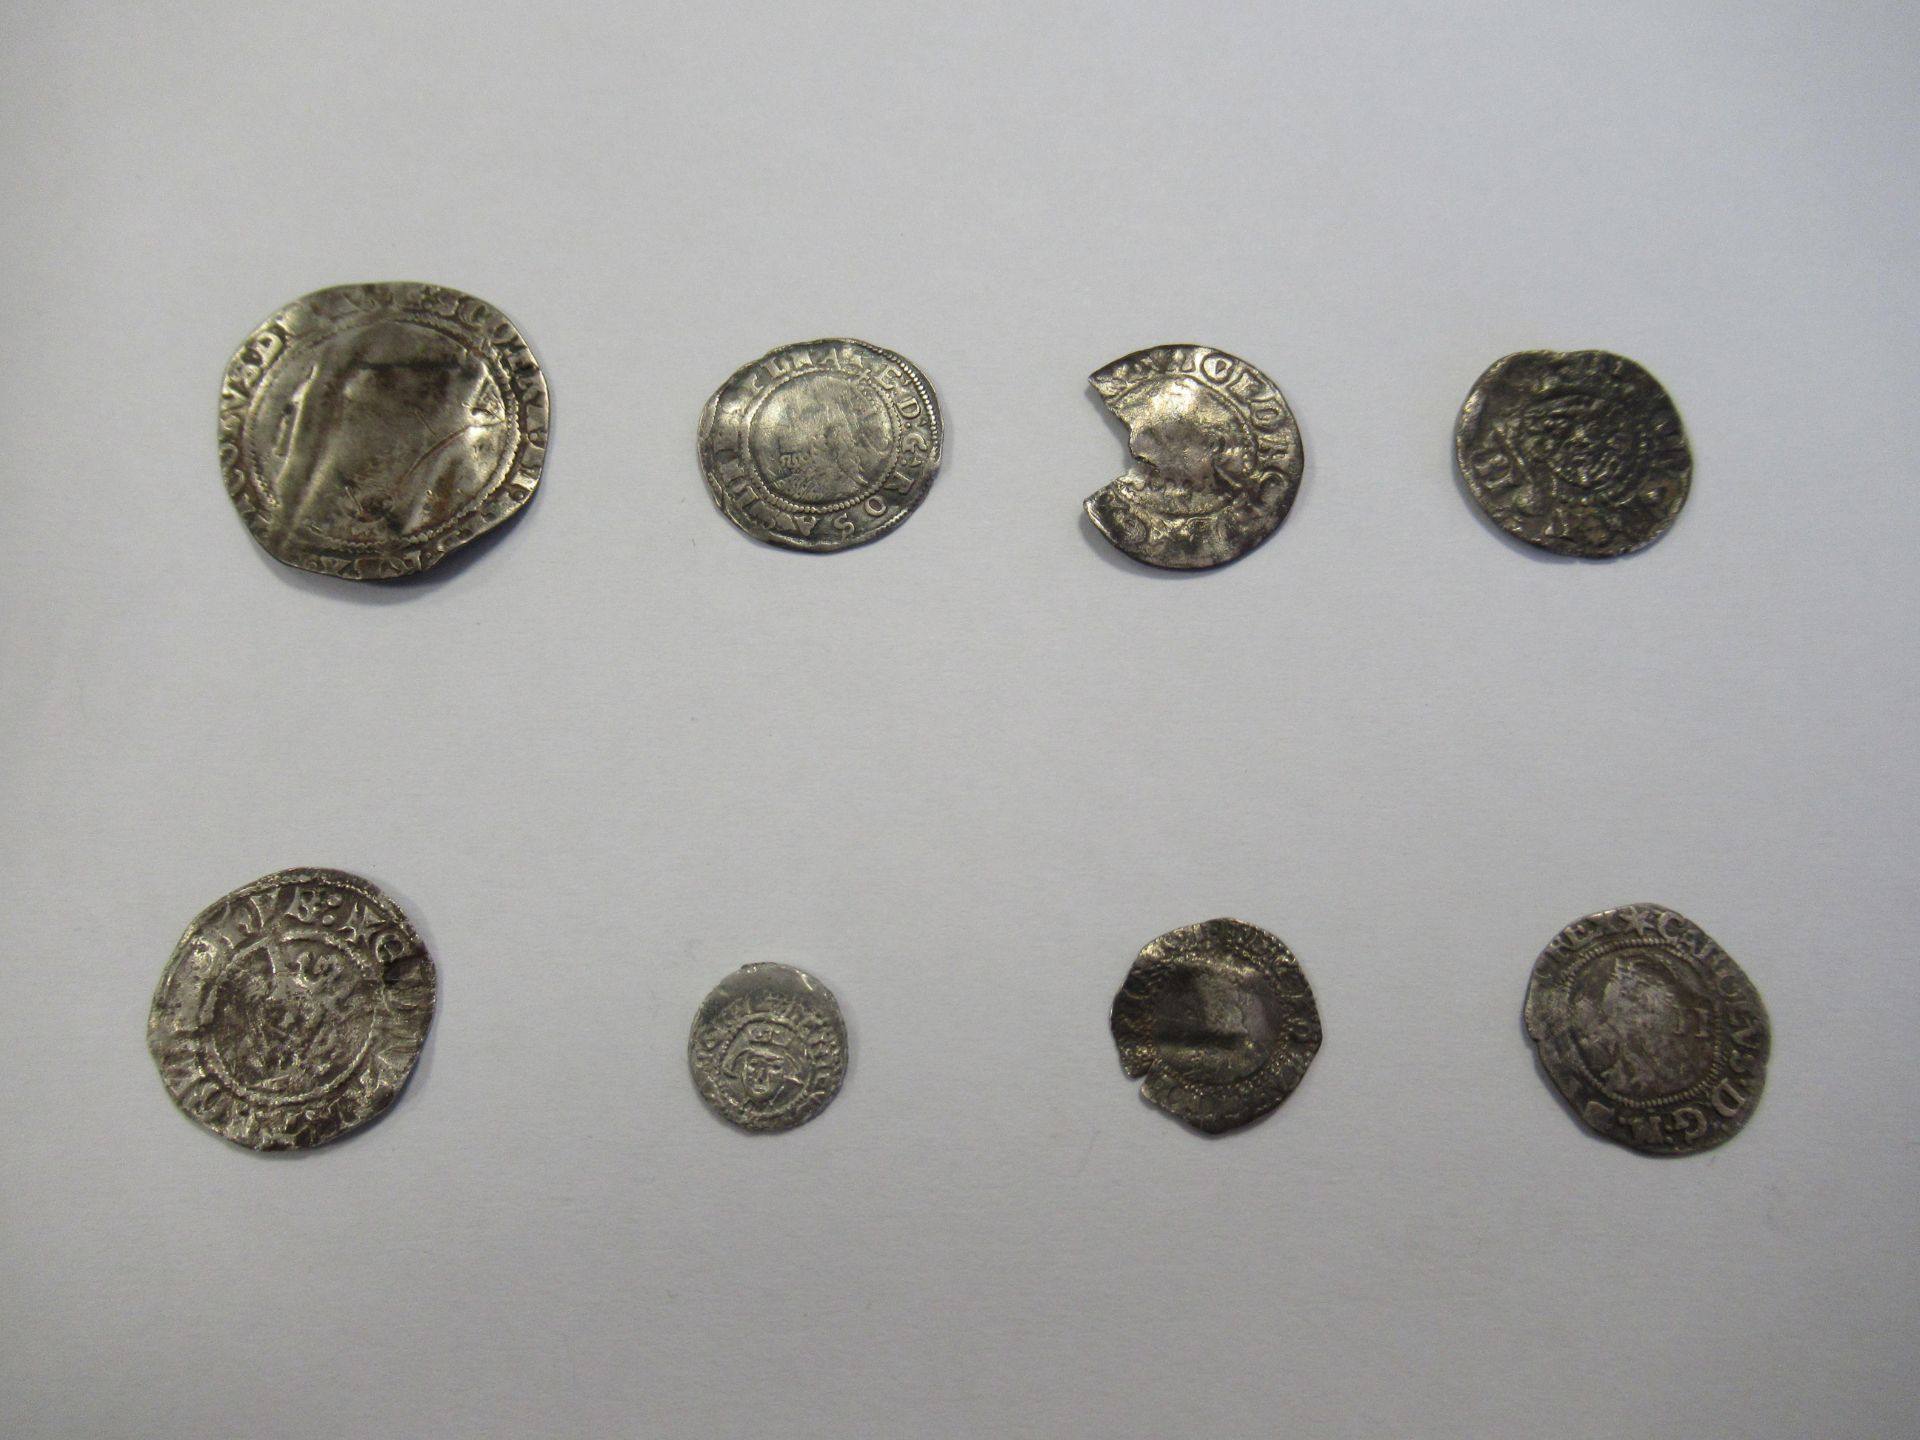 8x "silver" coins including Edwardian 1307-1310, Elizabethan Half Groat, Henry III coin etc